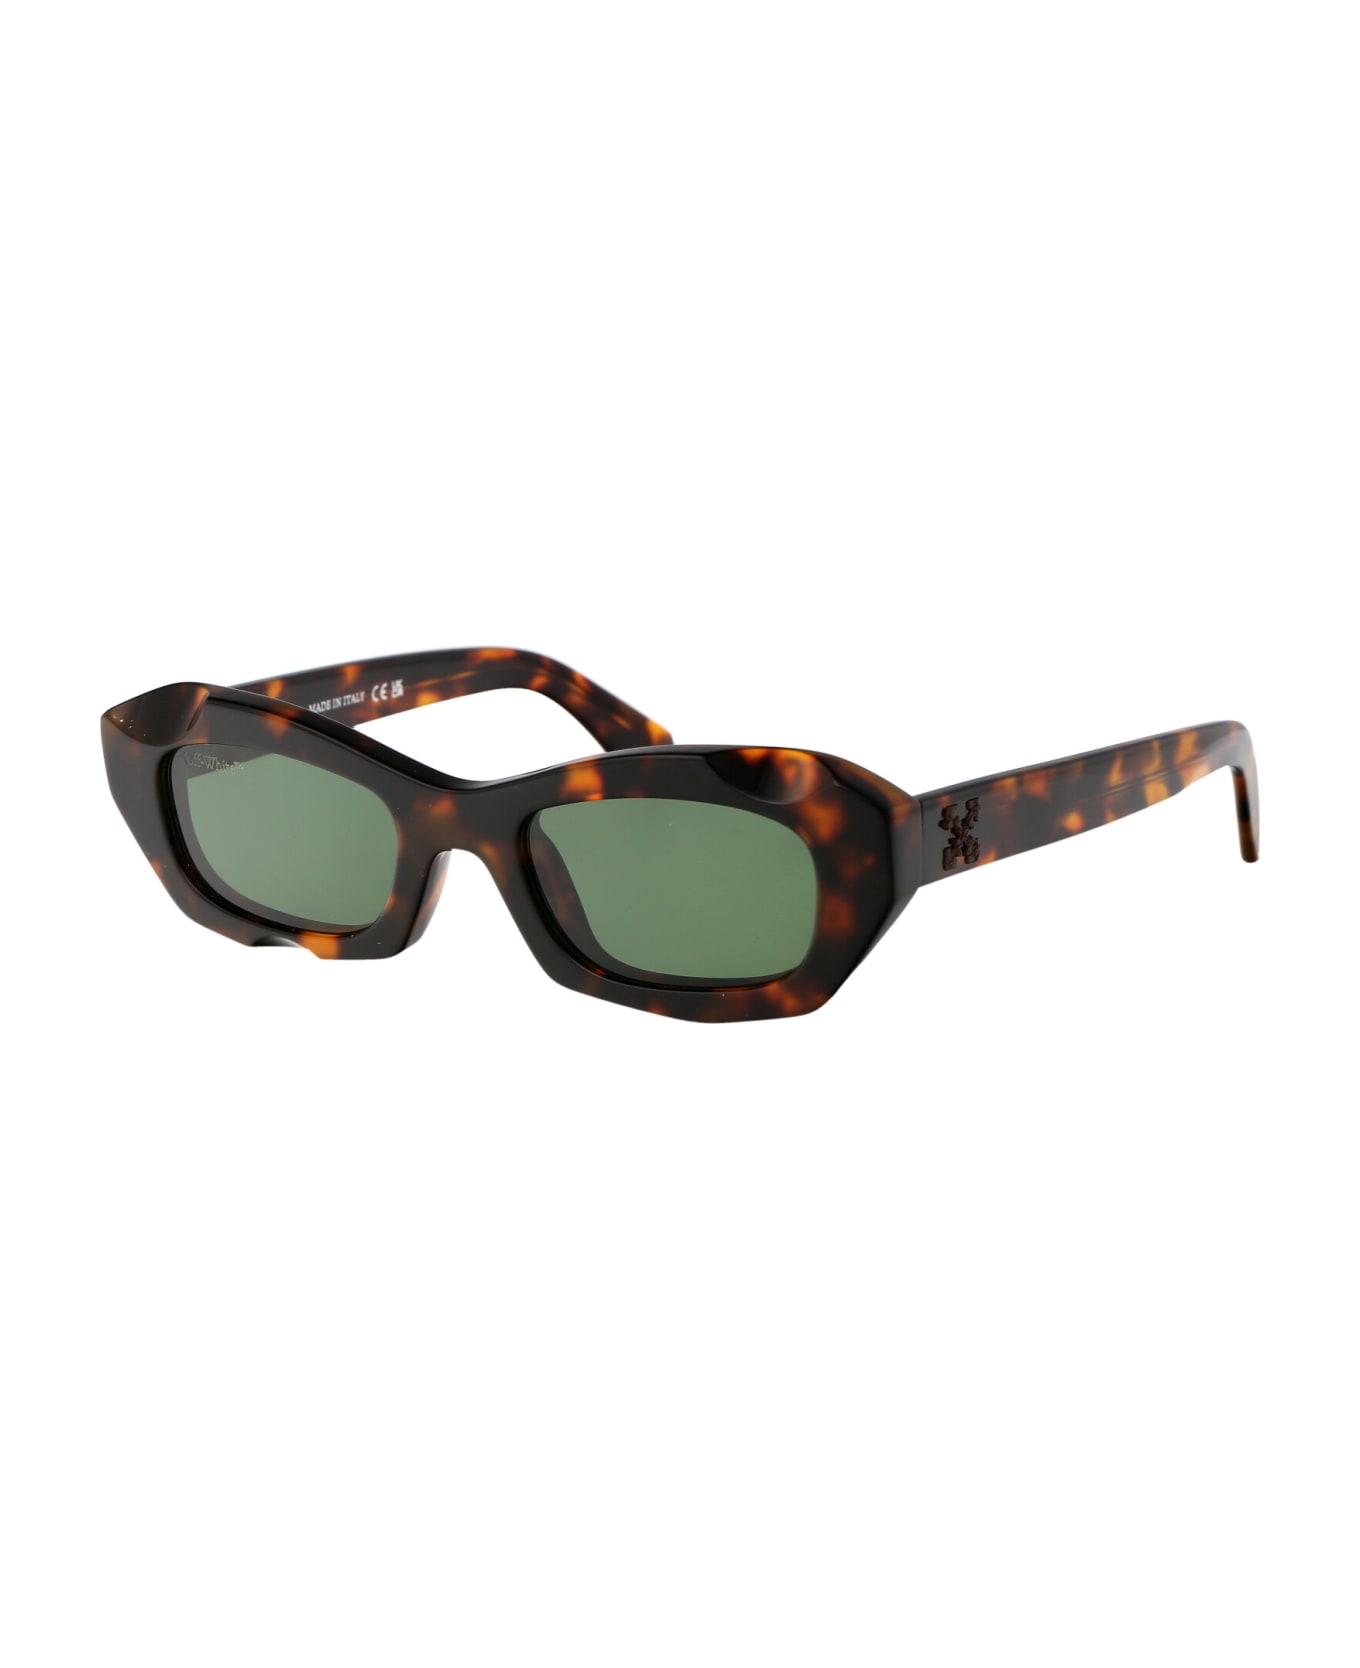 Off-White Venezia Sunglasses - 6055 HAVANA サングラス